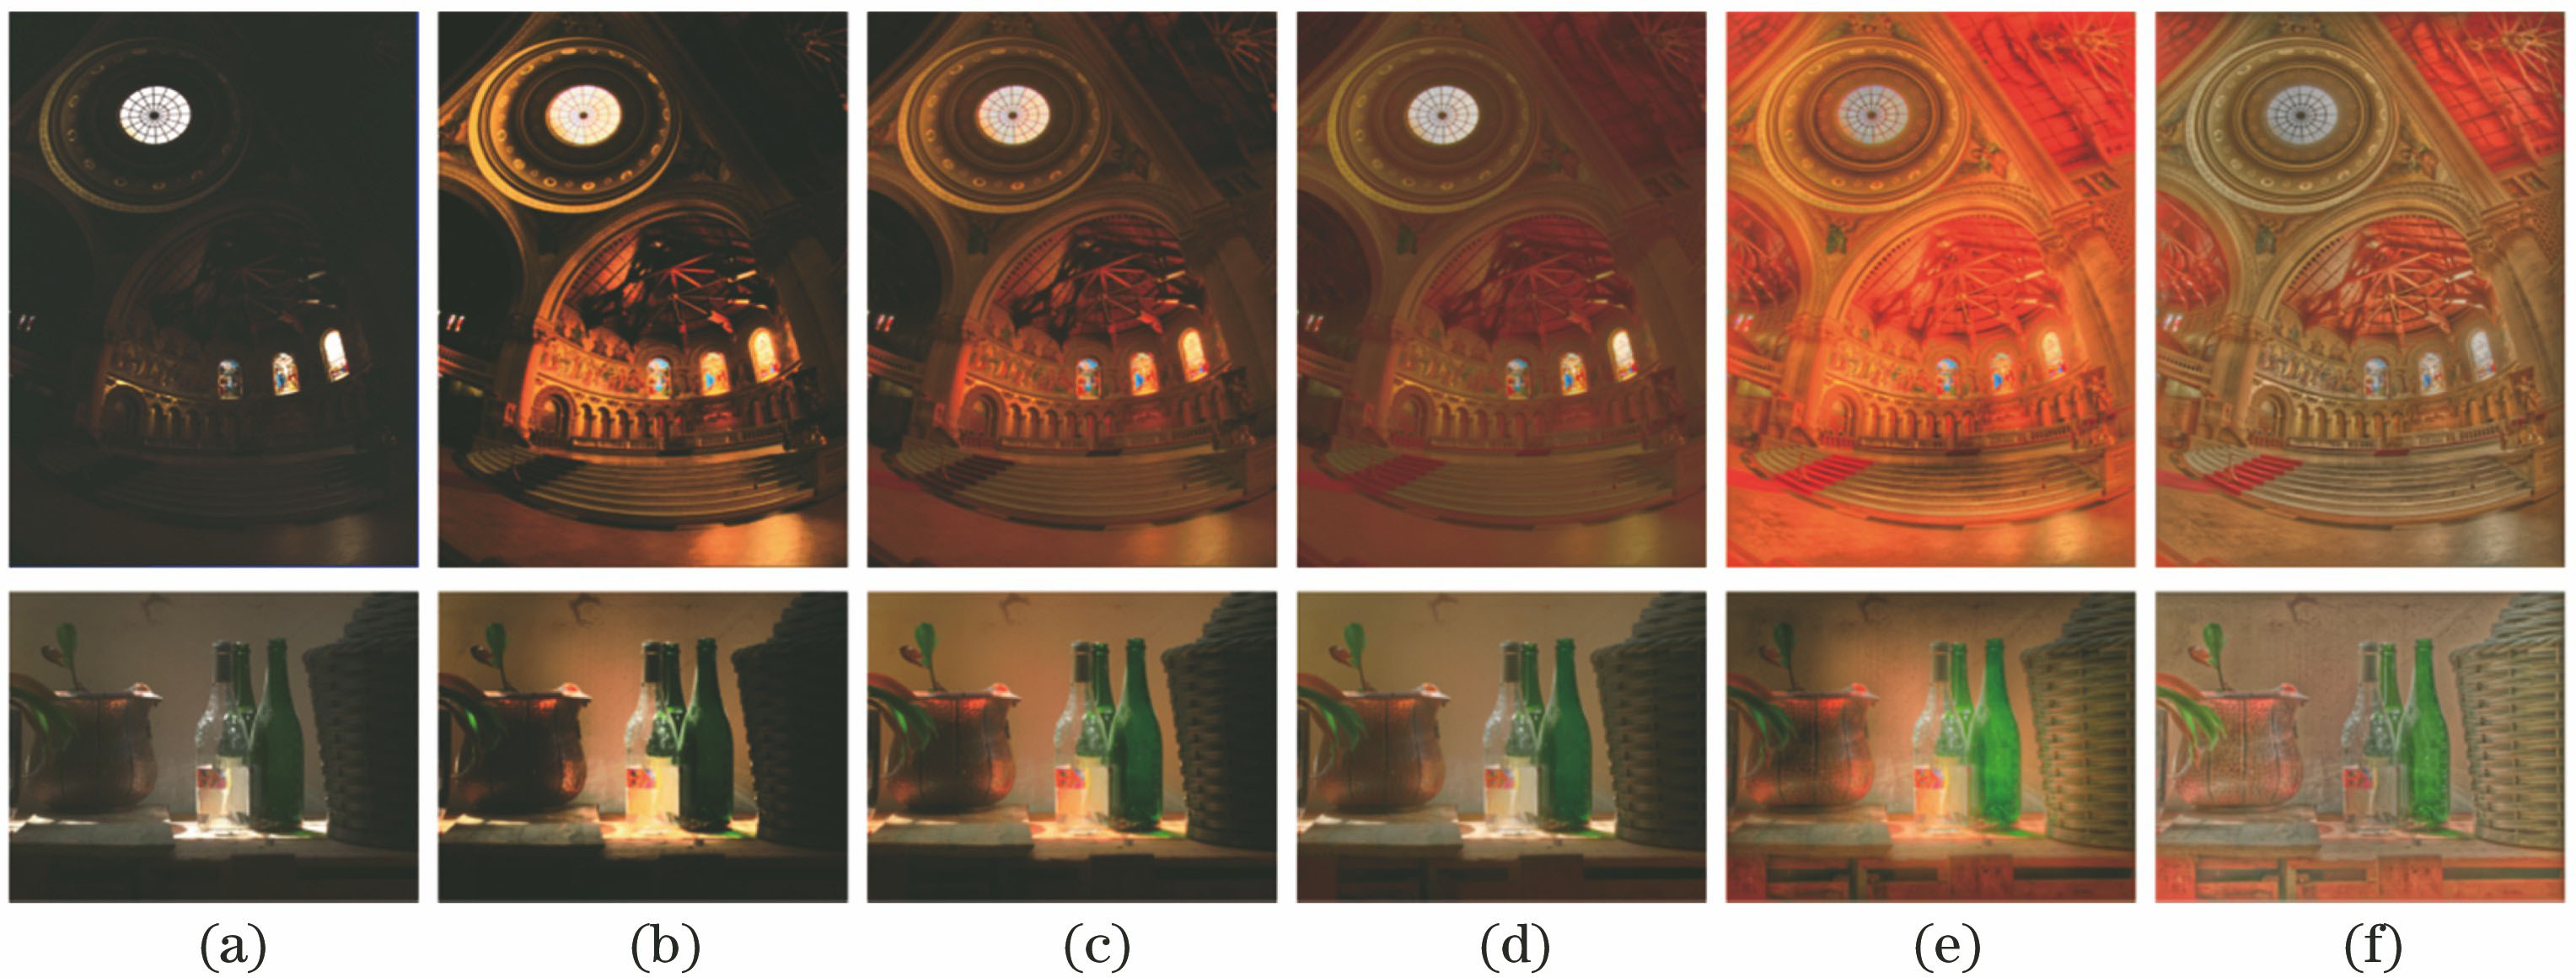 Tone mapping comparison experiment results of church and desktop images. (a) Original images; (b) Larson algorithm; (c) Drago algorithm; (d) Reinhard algorithm; (e) gradient domain algorithm; (f) our algorithm